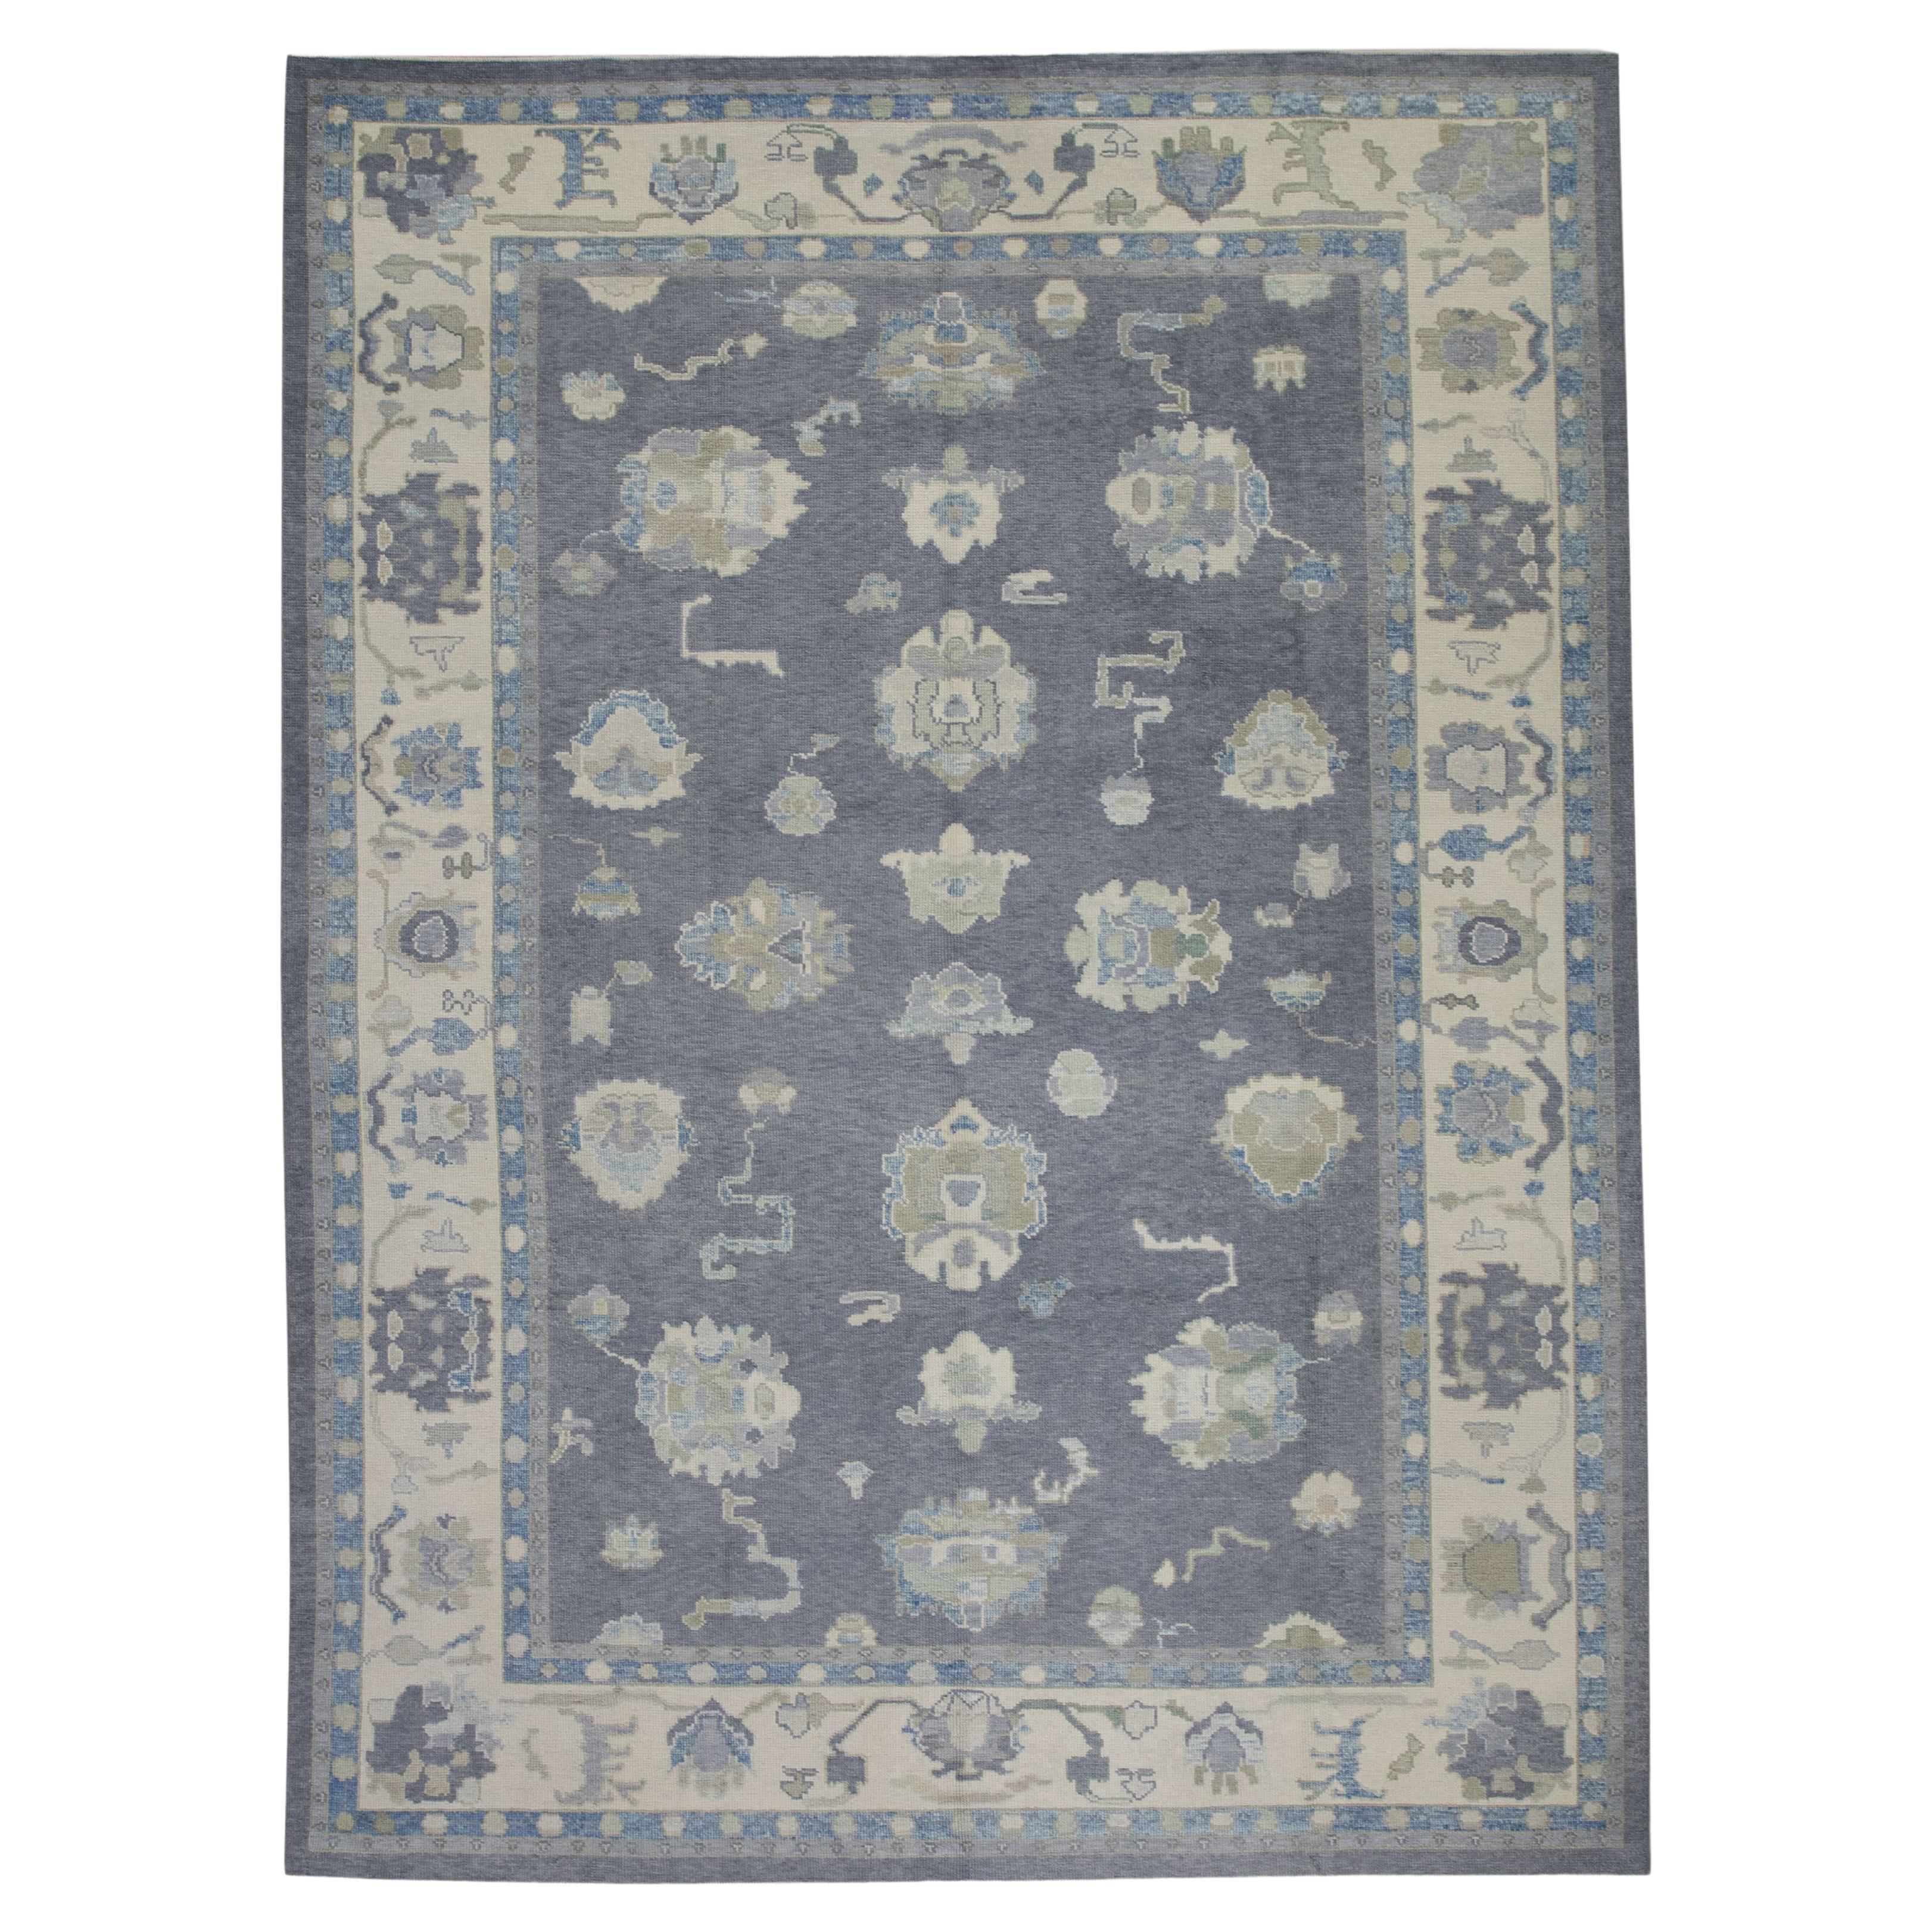 Gray & Blue Floral Design Handwoven Wool Turkish Oushak Rug 9' X 11'10"